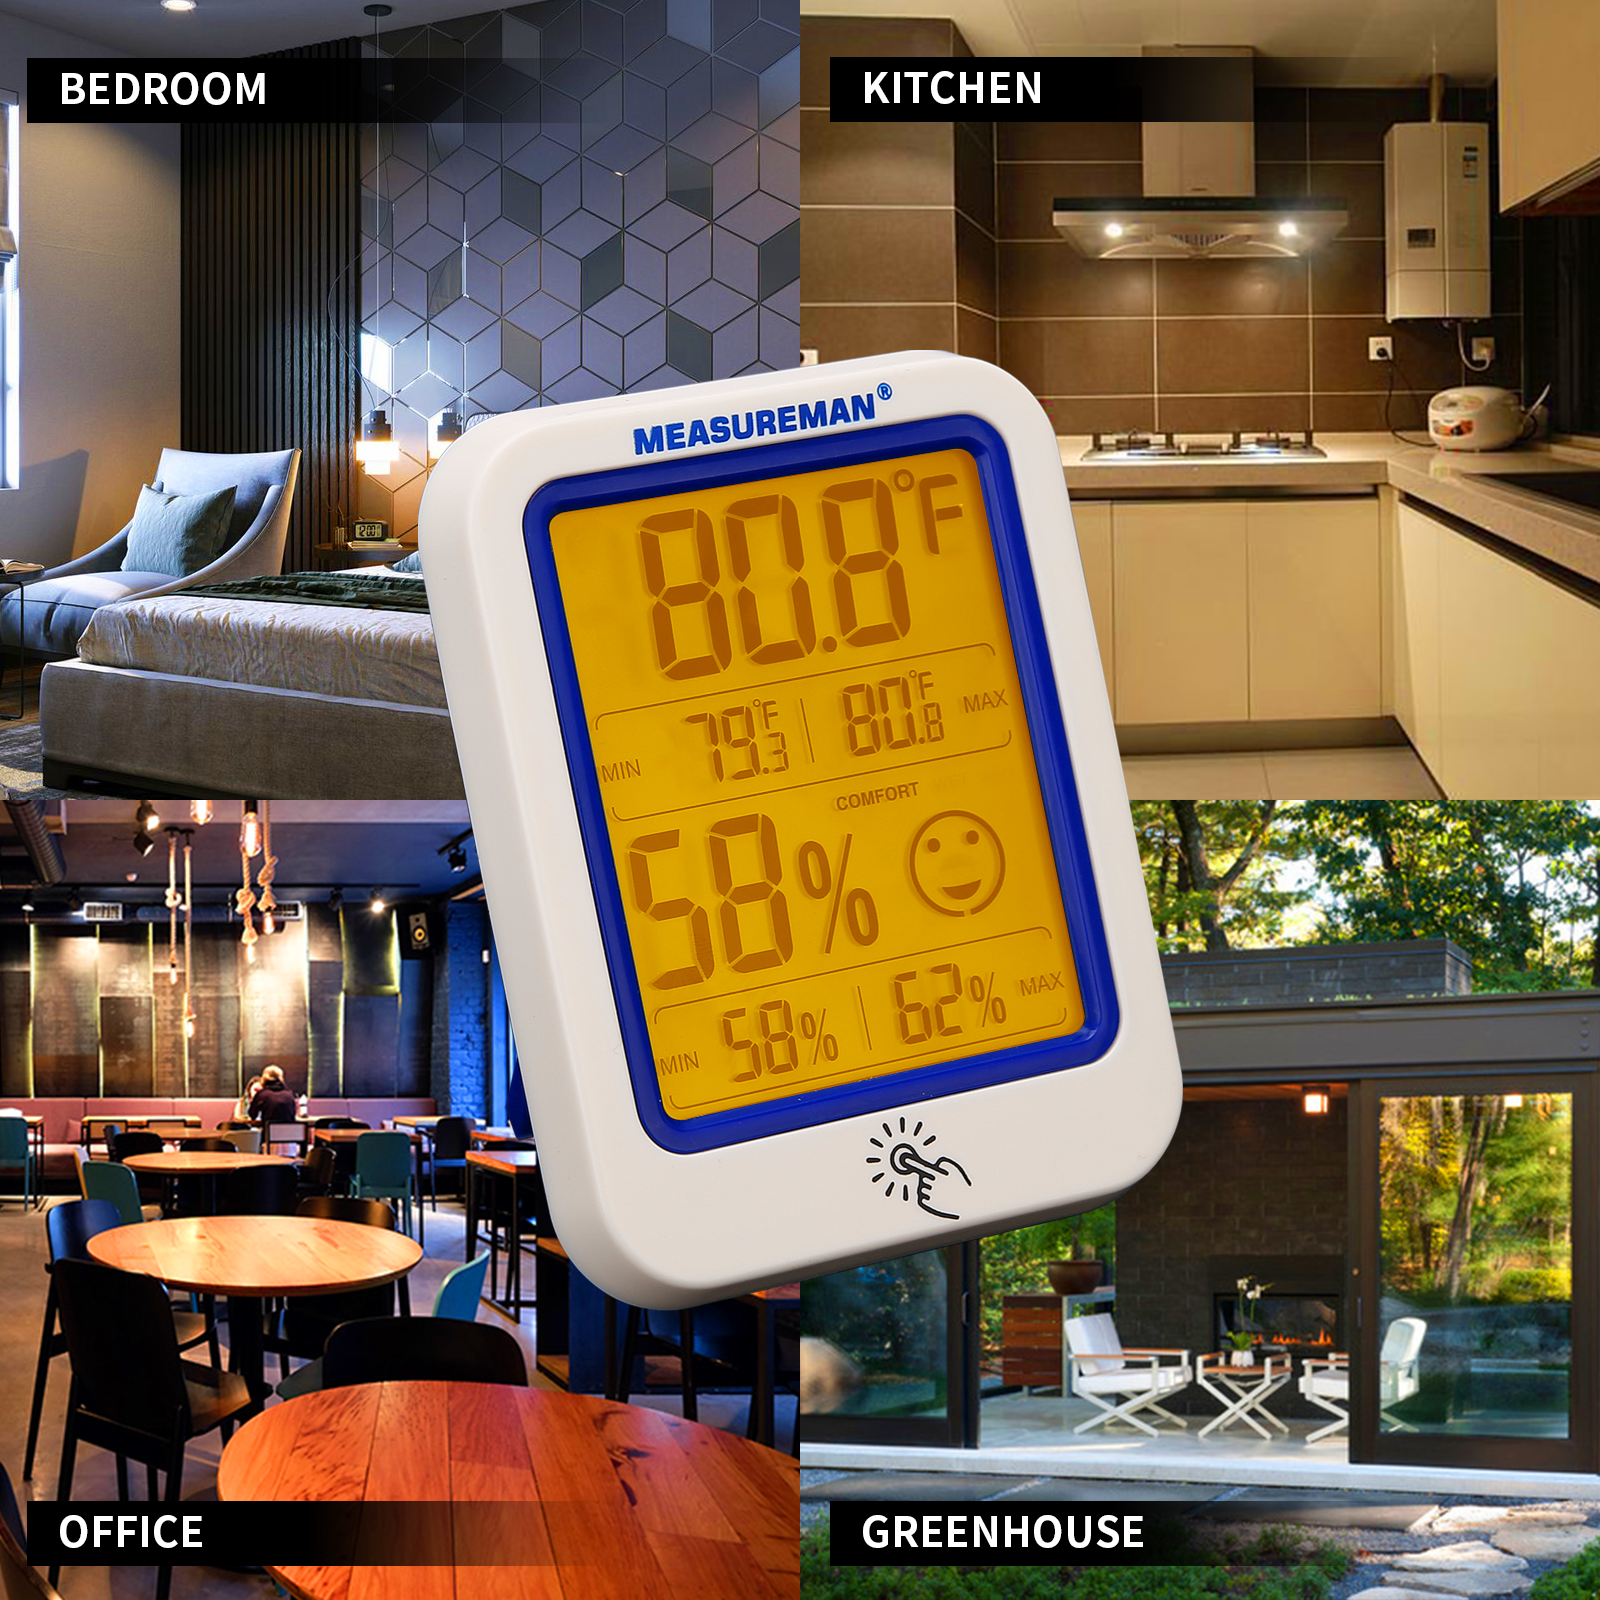 2x Digital Room Thermometer Indoor Hygrometer Temperature Humidity Meter  Clocks